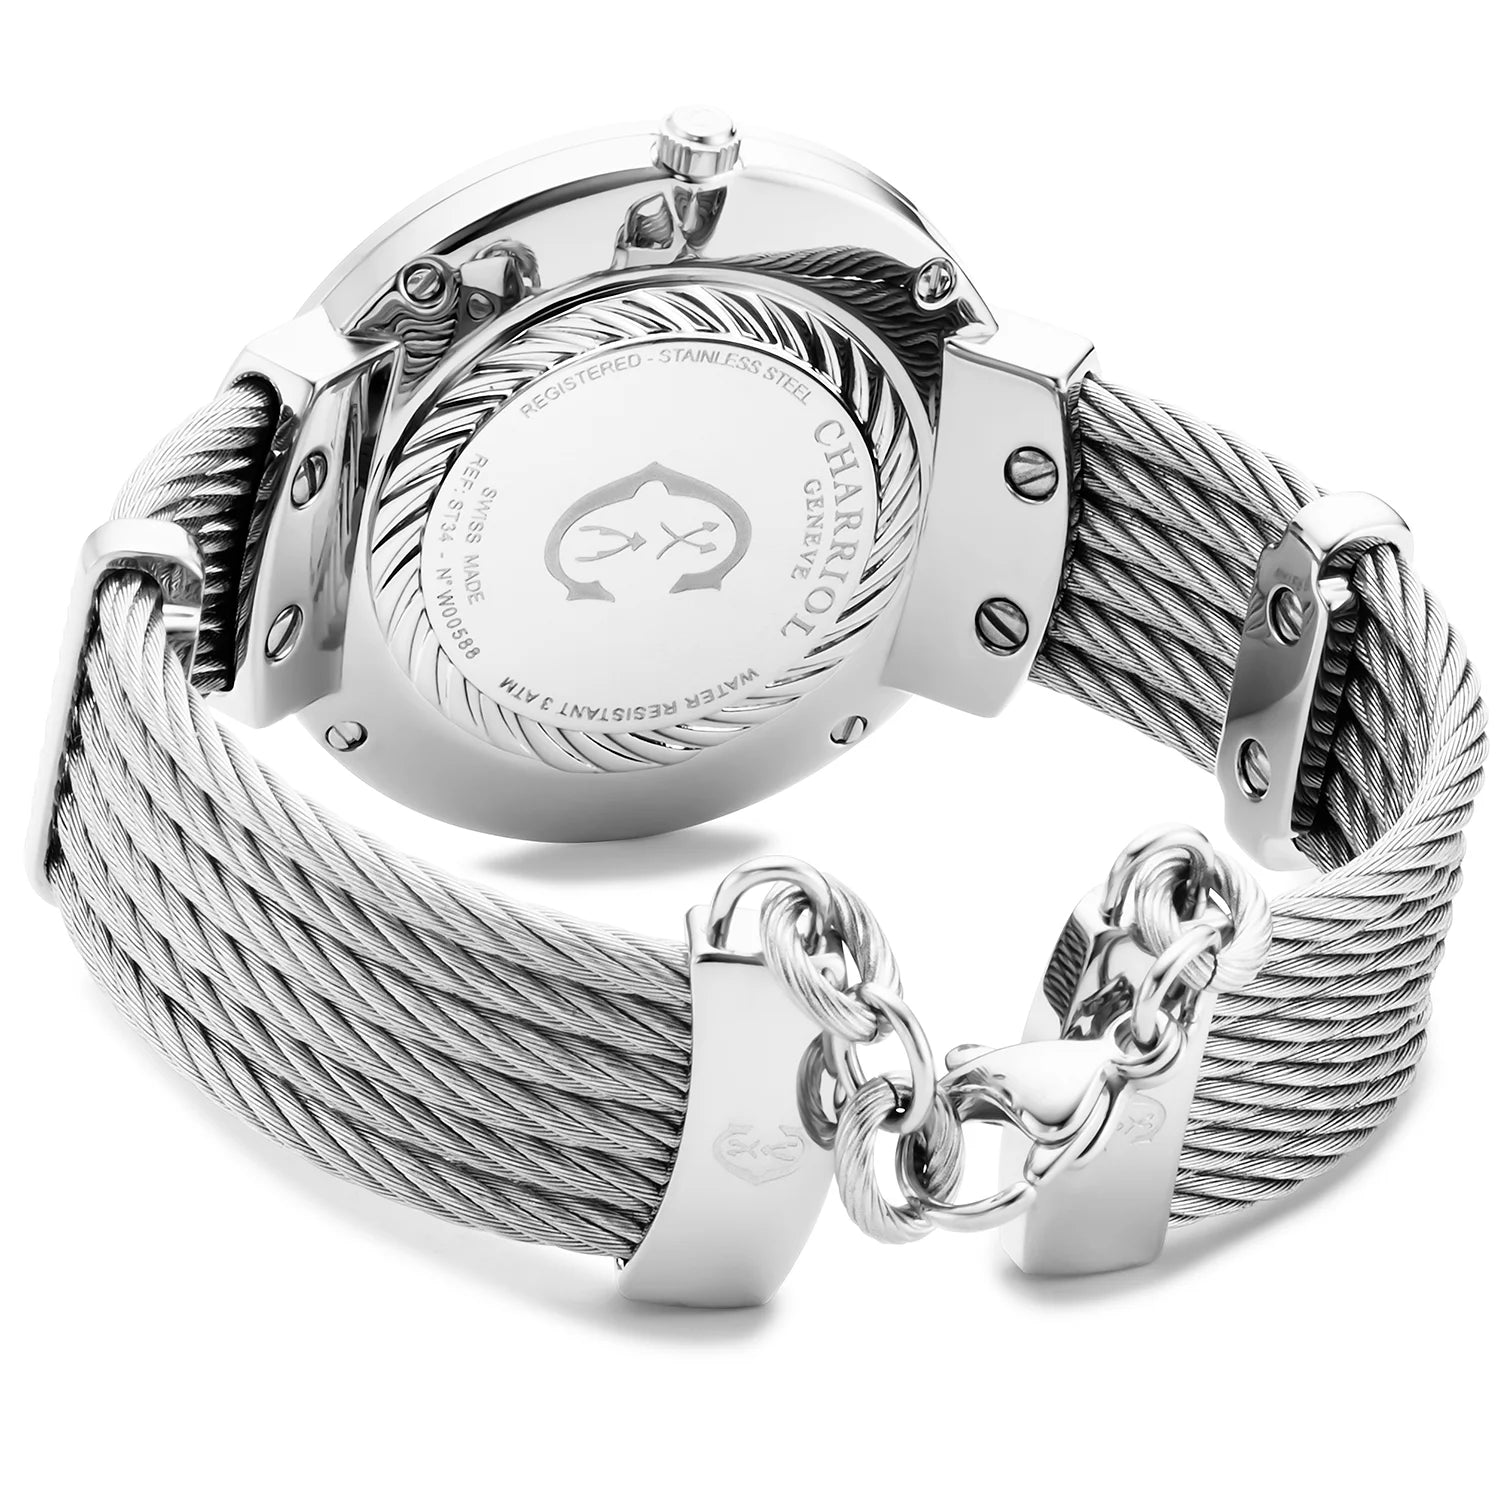 Slim Watch Star and Steel - Charriol Geneve -  Watch